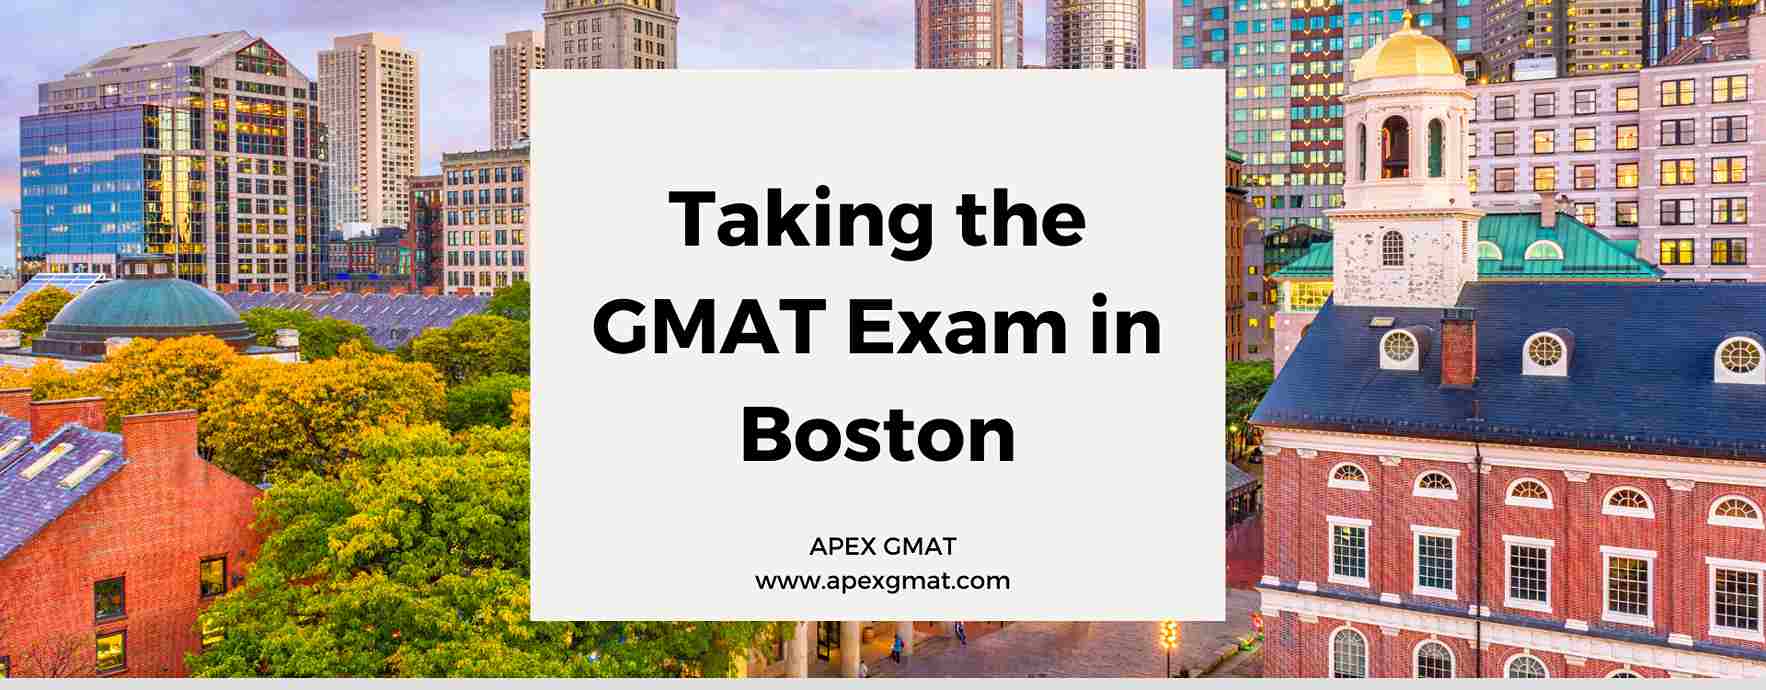 Taking the GMAT Exam in Boston